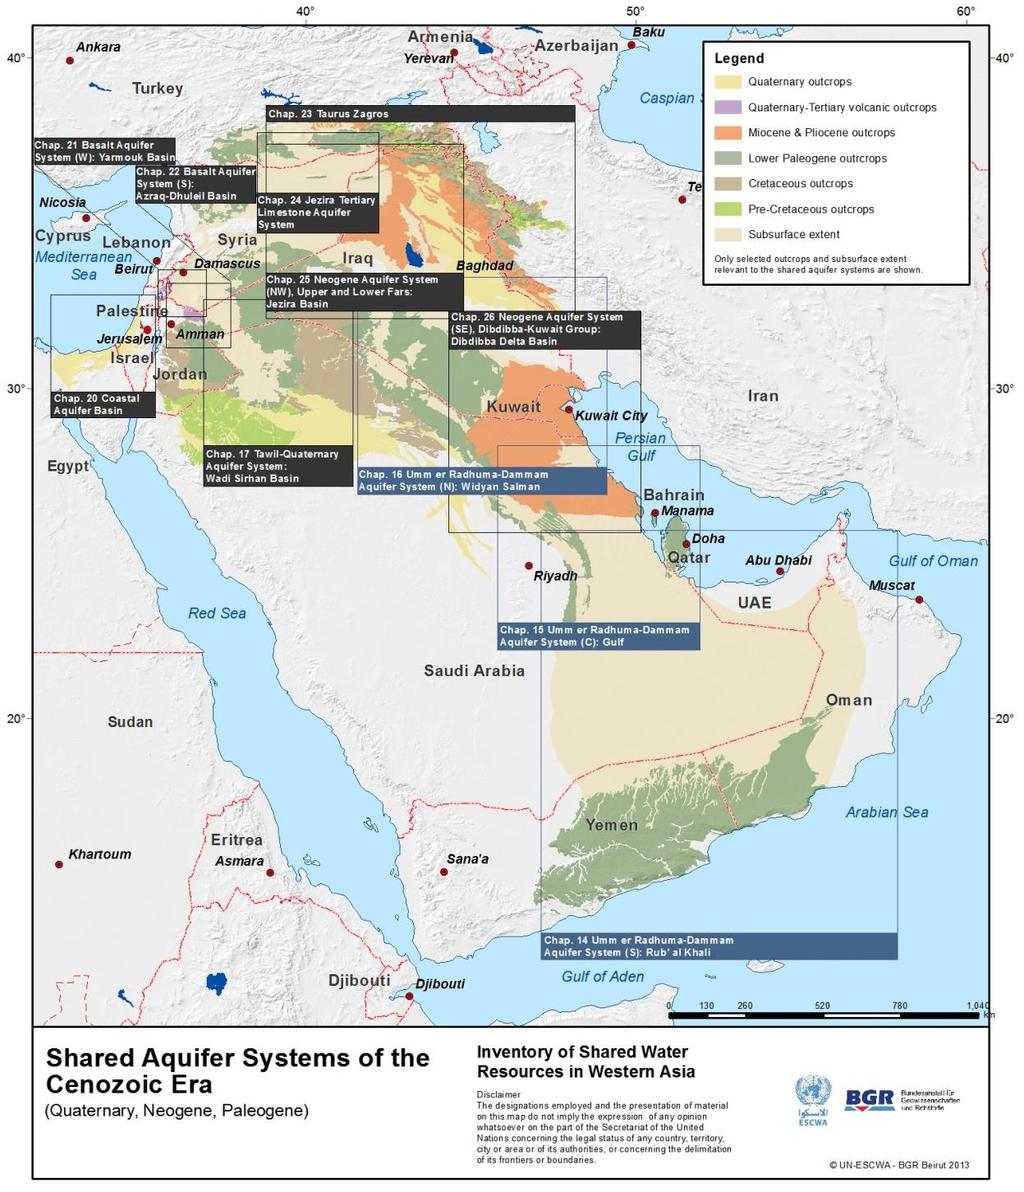 Shared Aquifer Systems: Cenozoic Era More shared aquifers than generally understood Umm er Radhuma-Dammam Aquifer System (North): Widyan-Salman - Iraq, Kuwait, Saudi Arabia Umm er Radhuma-Dammam